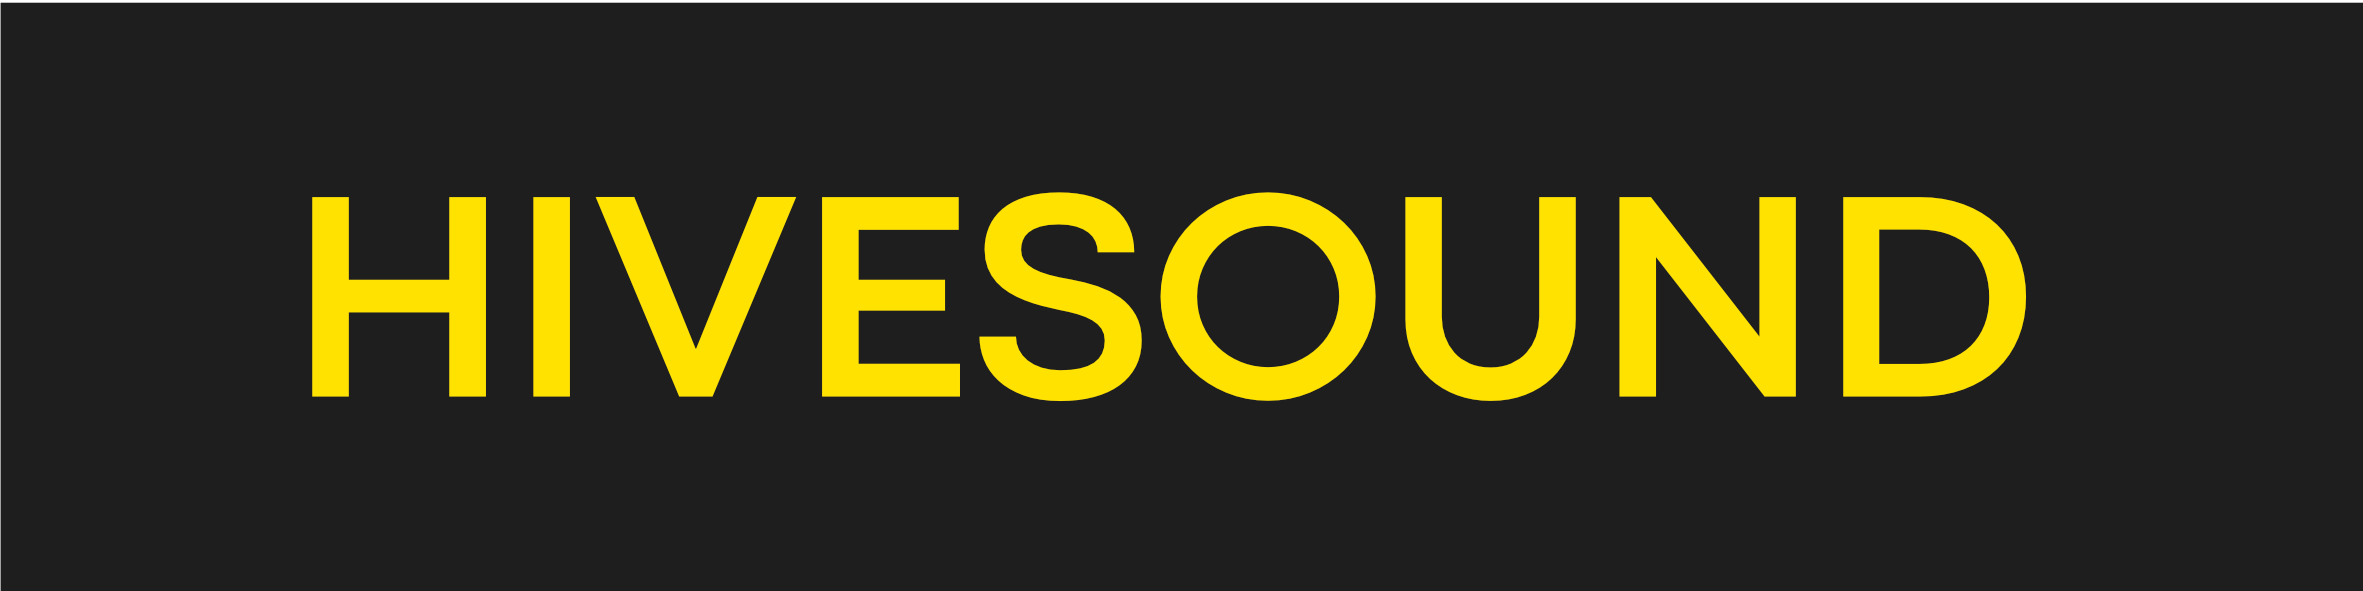 hivesound-1709893378.png logo